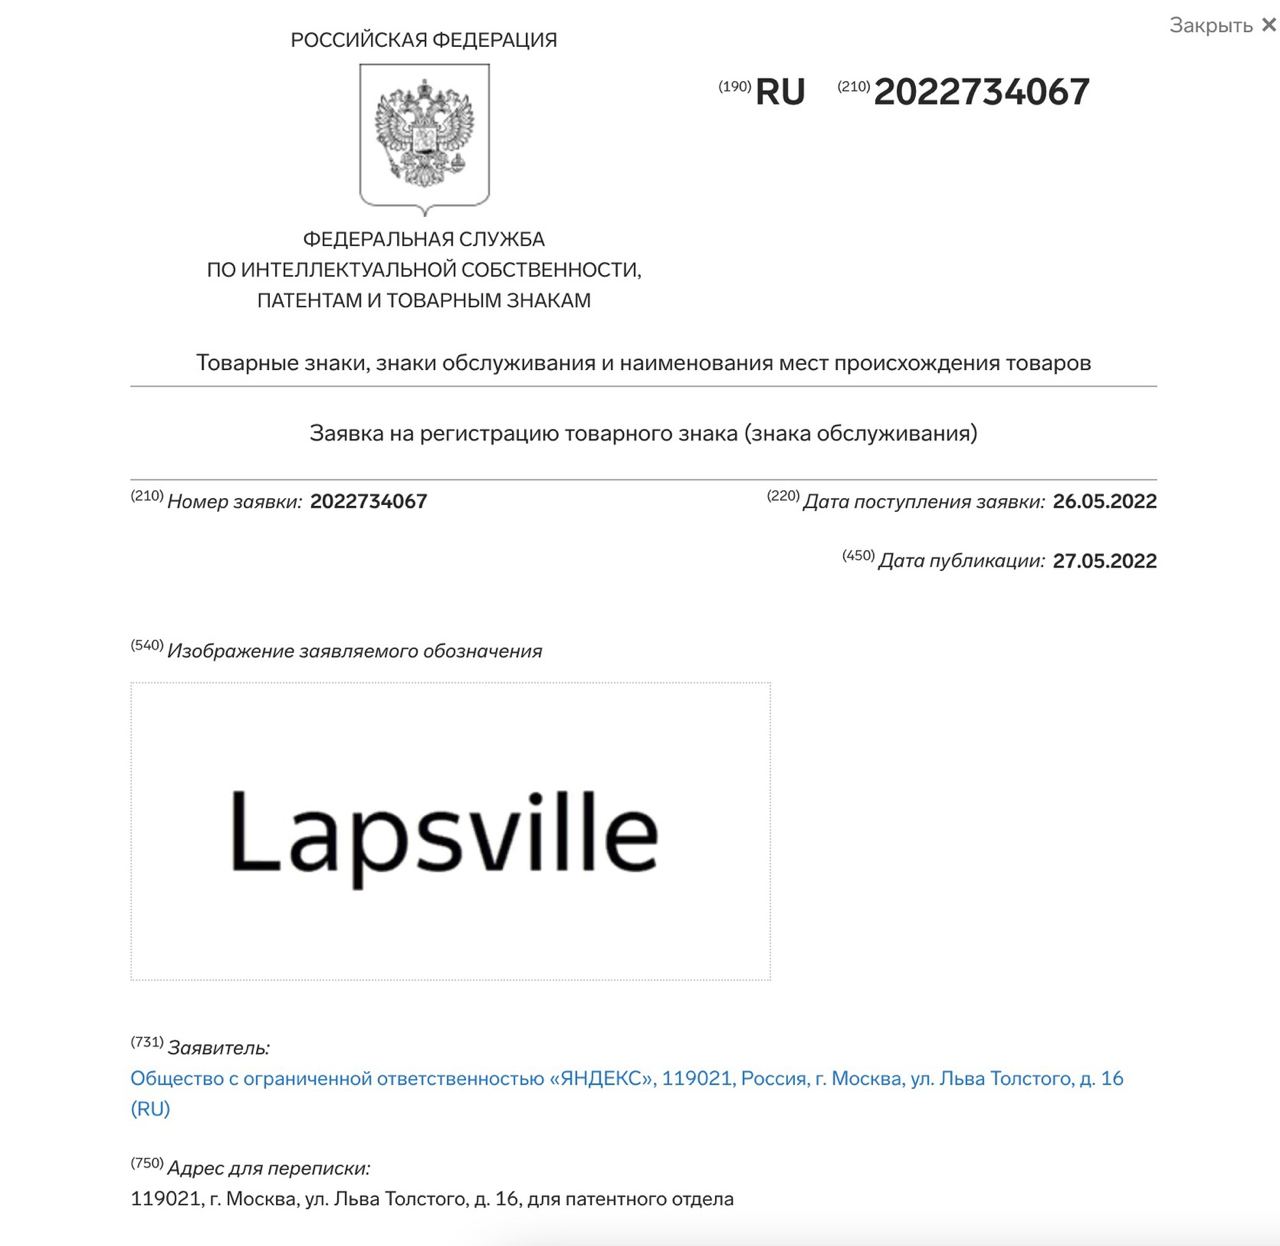 Lapsville свидетельство о регистрации товарного знака